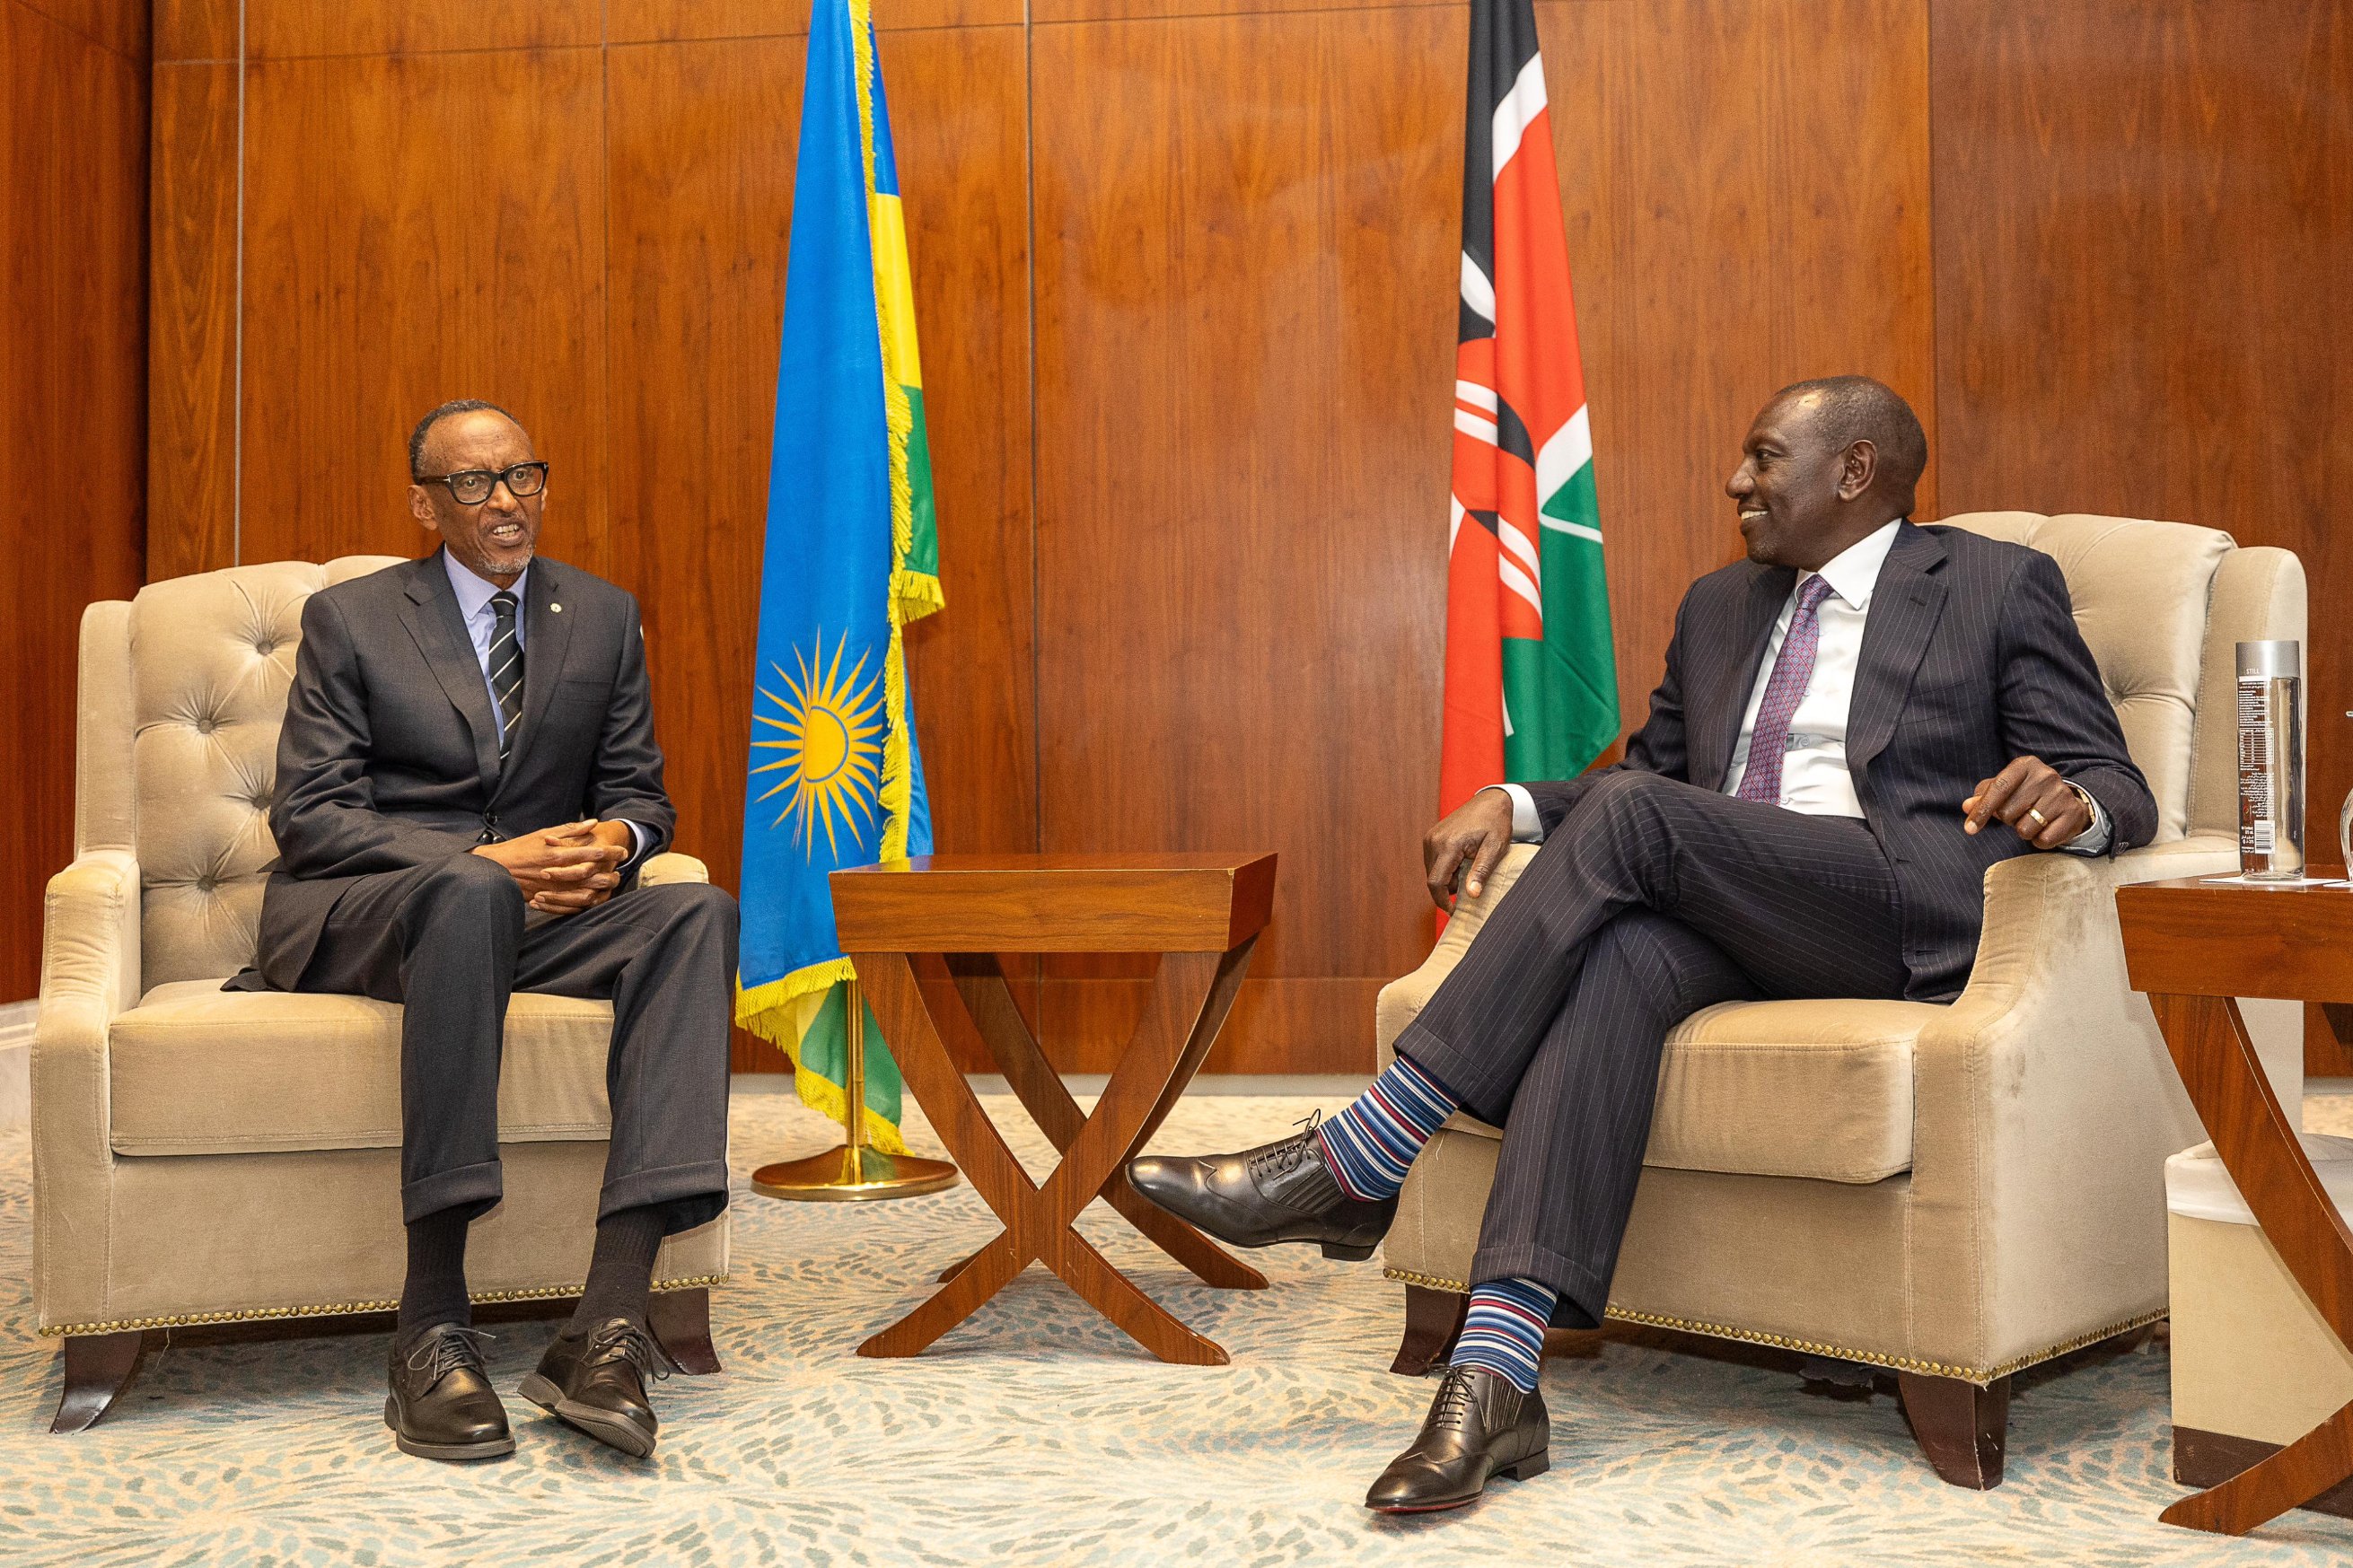 President Ruto meets President Paul Kagame in Rwanda.